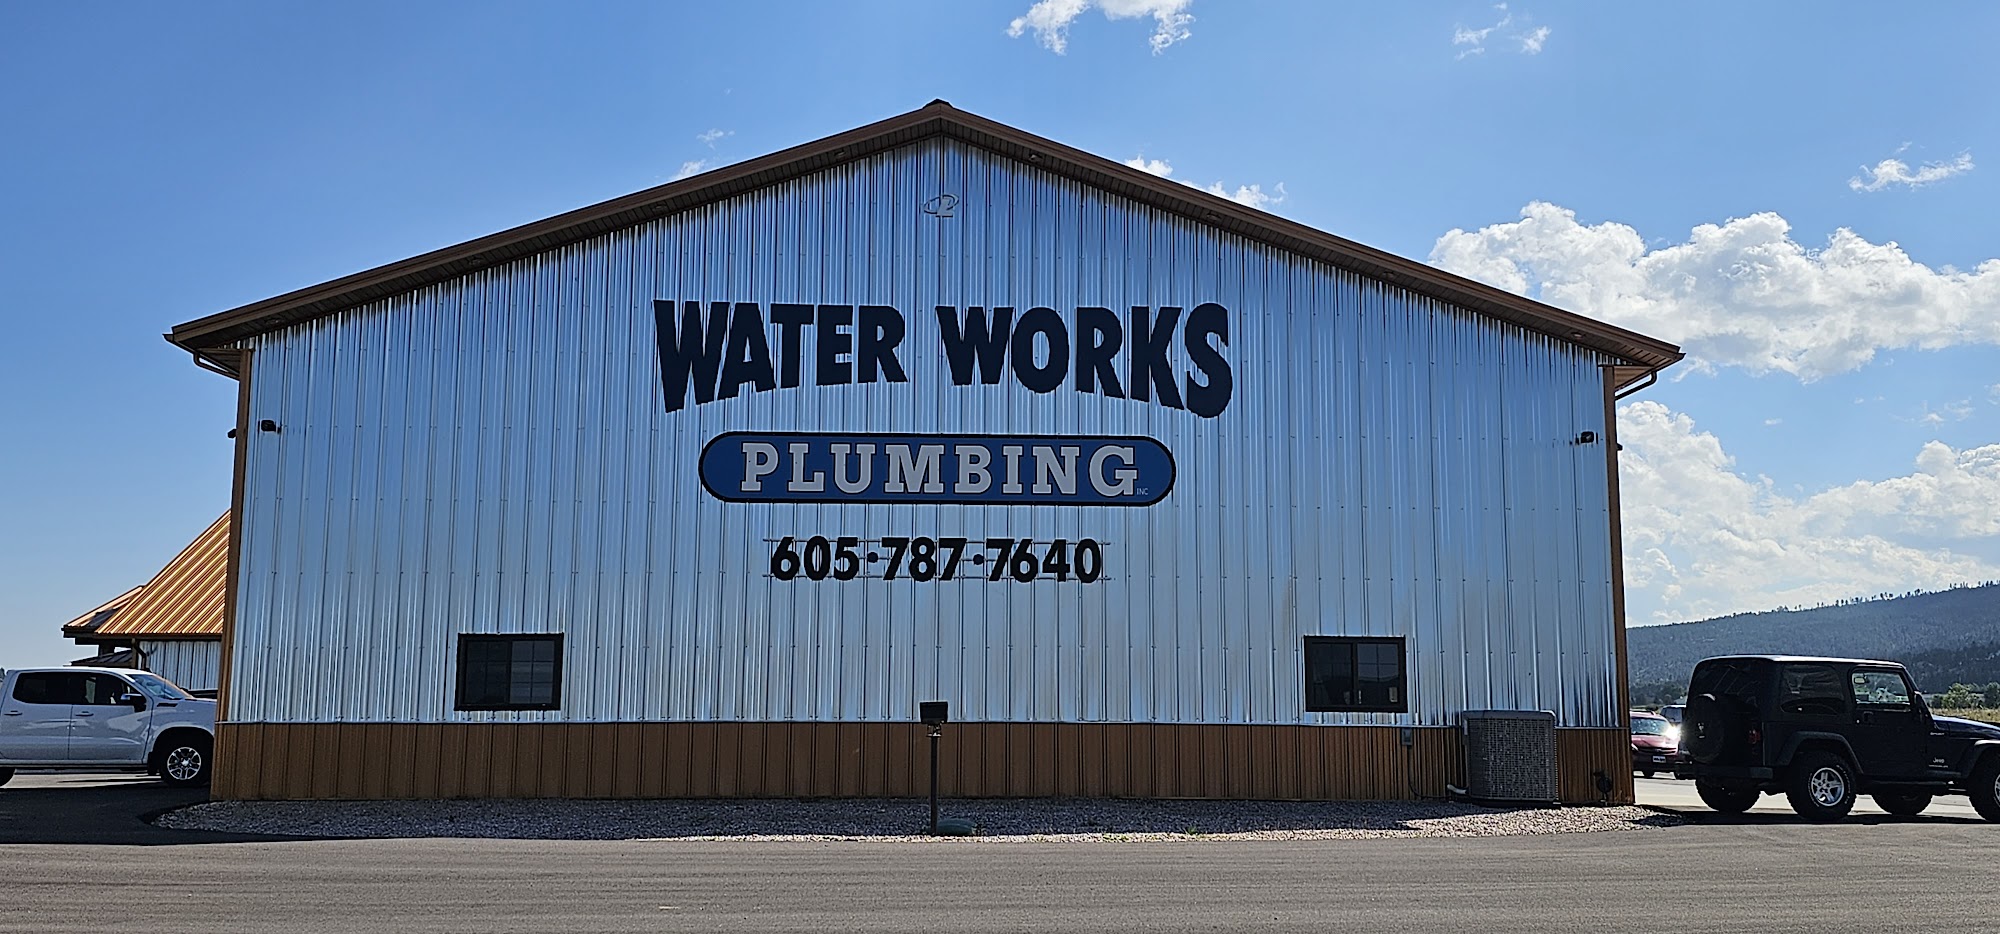 Waterworks Plumbing, Inc.